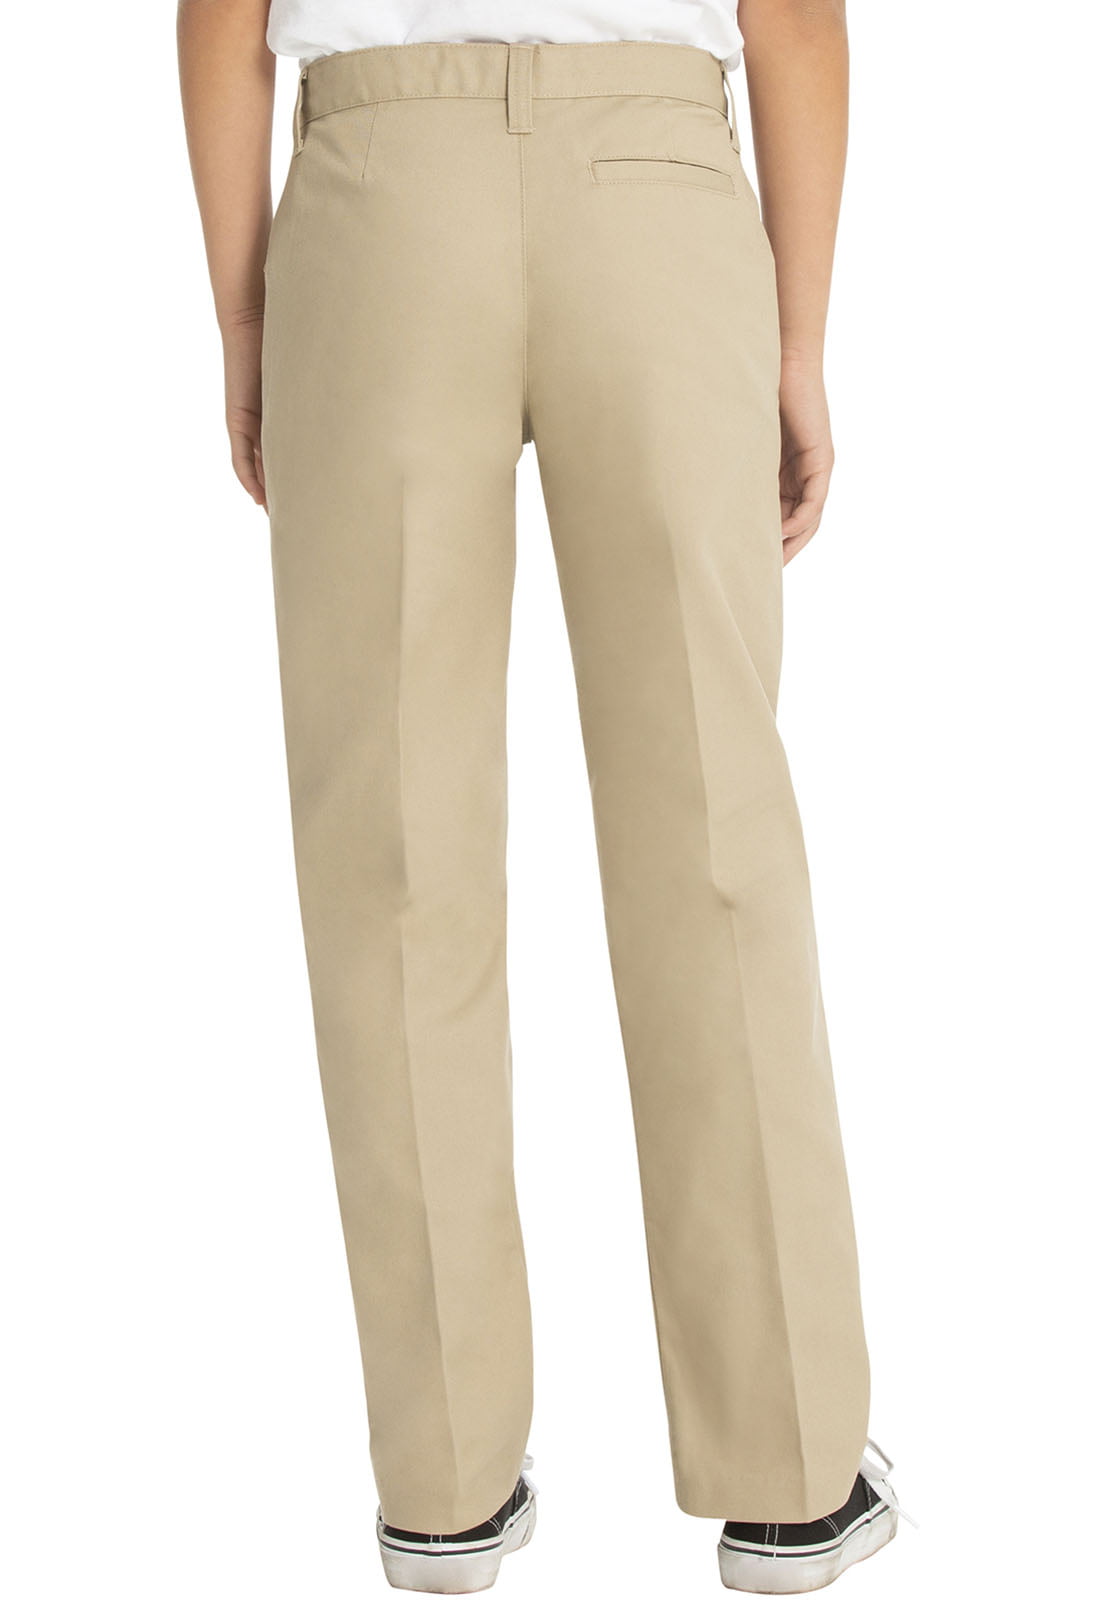 New With Tags Ladies HPI Khaki Uniform/Work Pants Size 16 